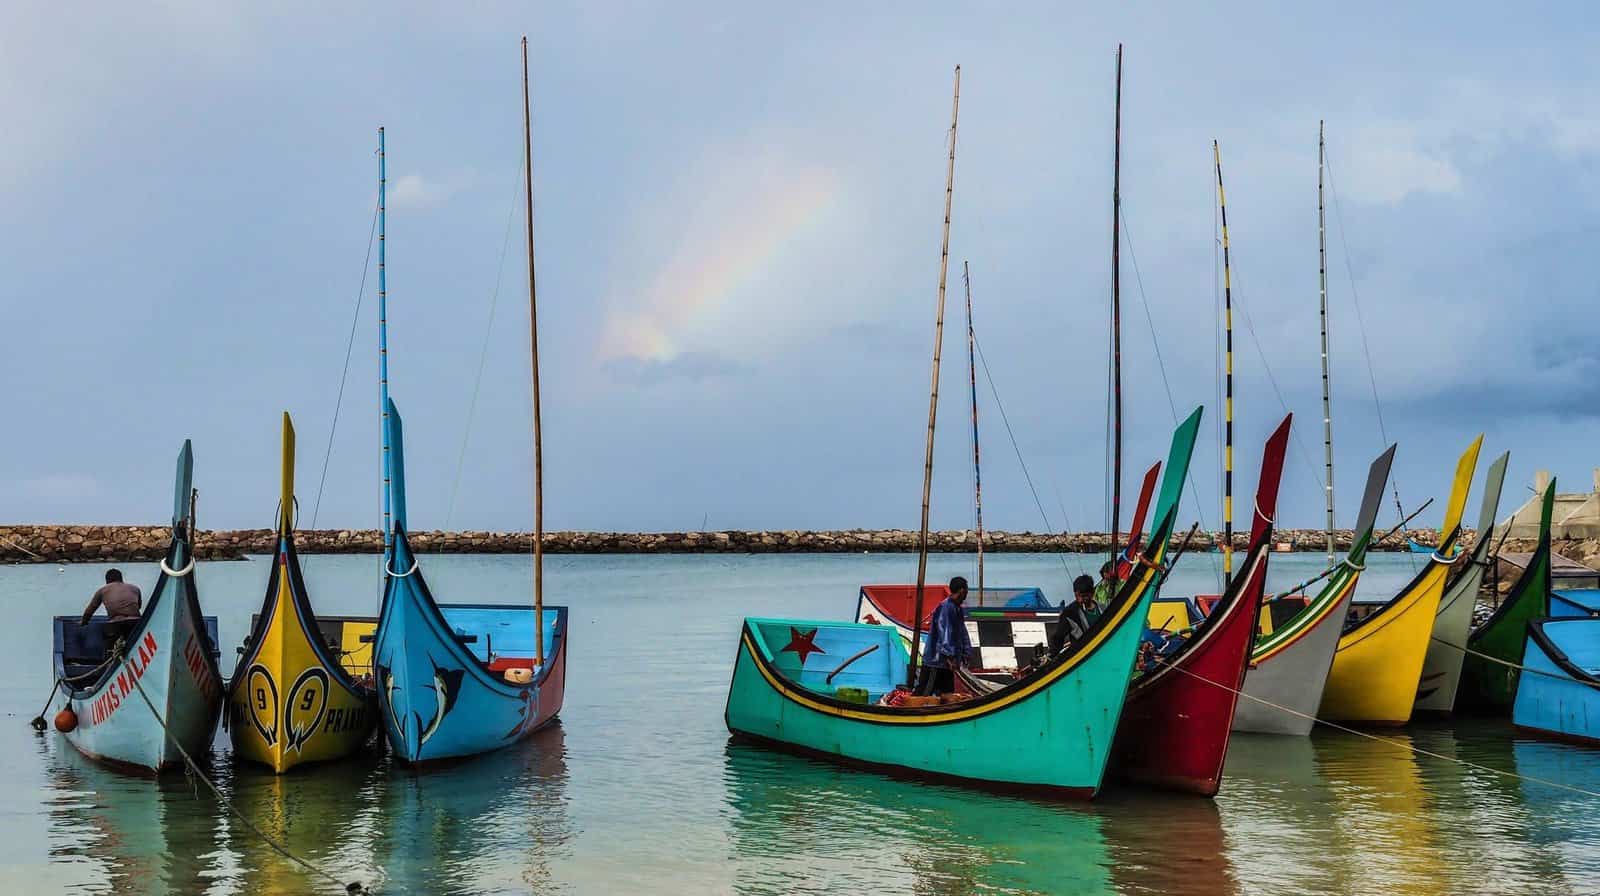 Pulau Weh bateau de pêches